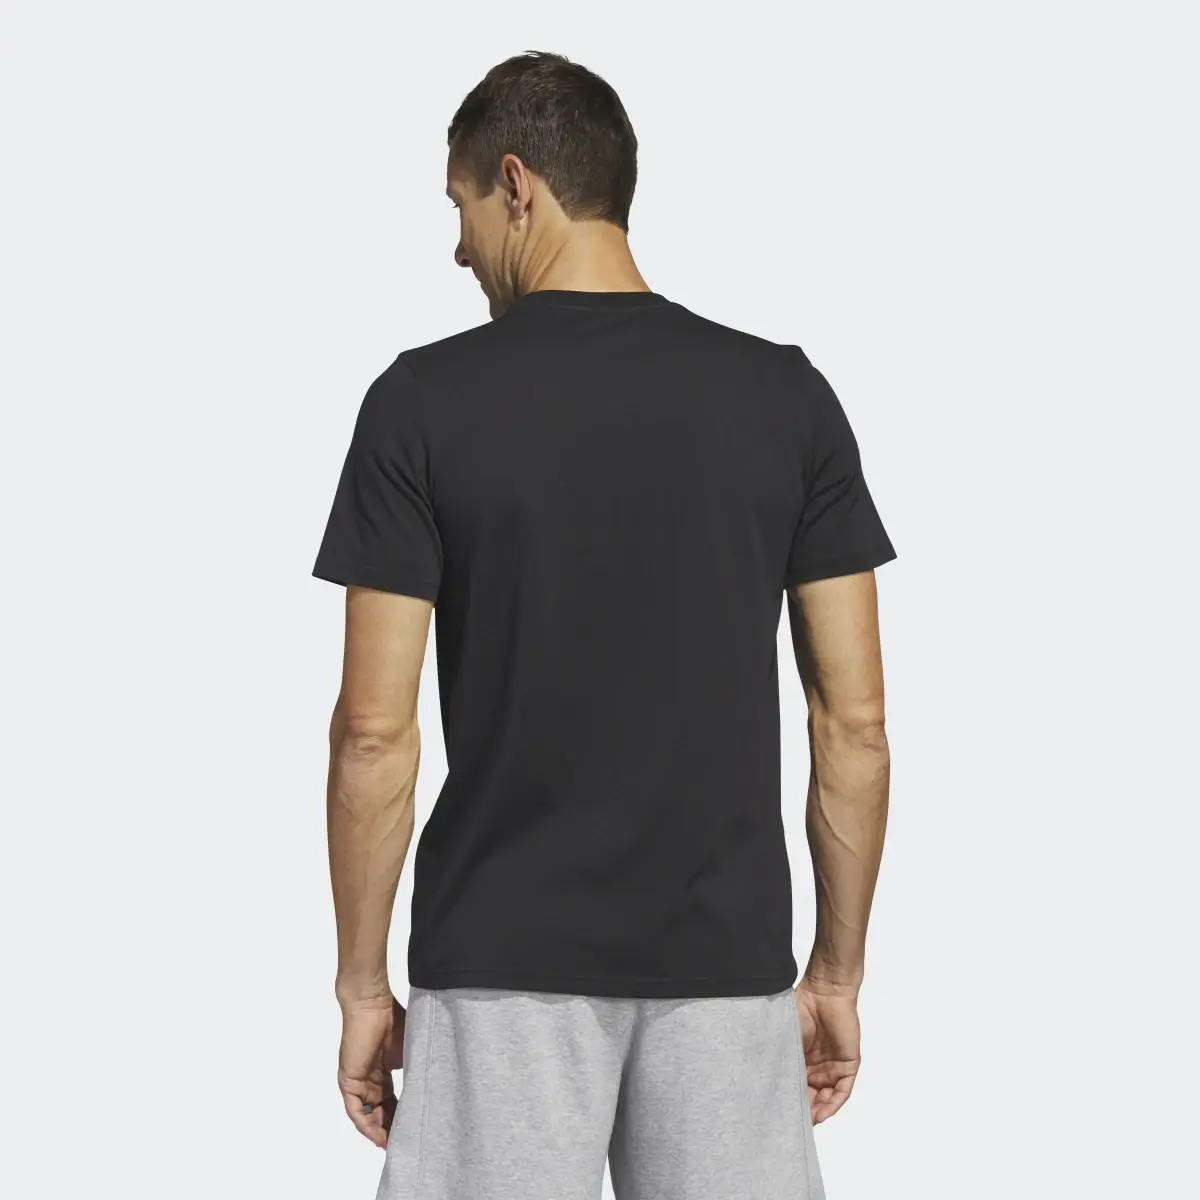 Adidas Sport Optimist Sun Logo Sportswear Graphic T-Shirt (Short Sleeve). 3